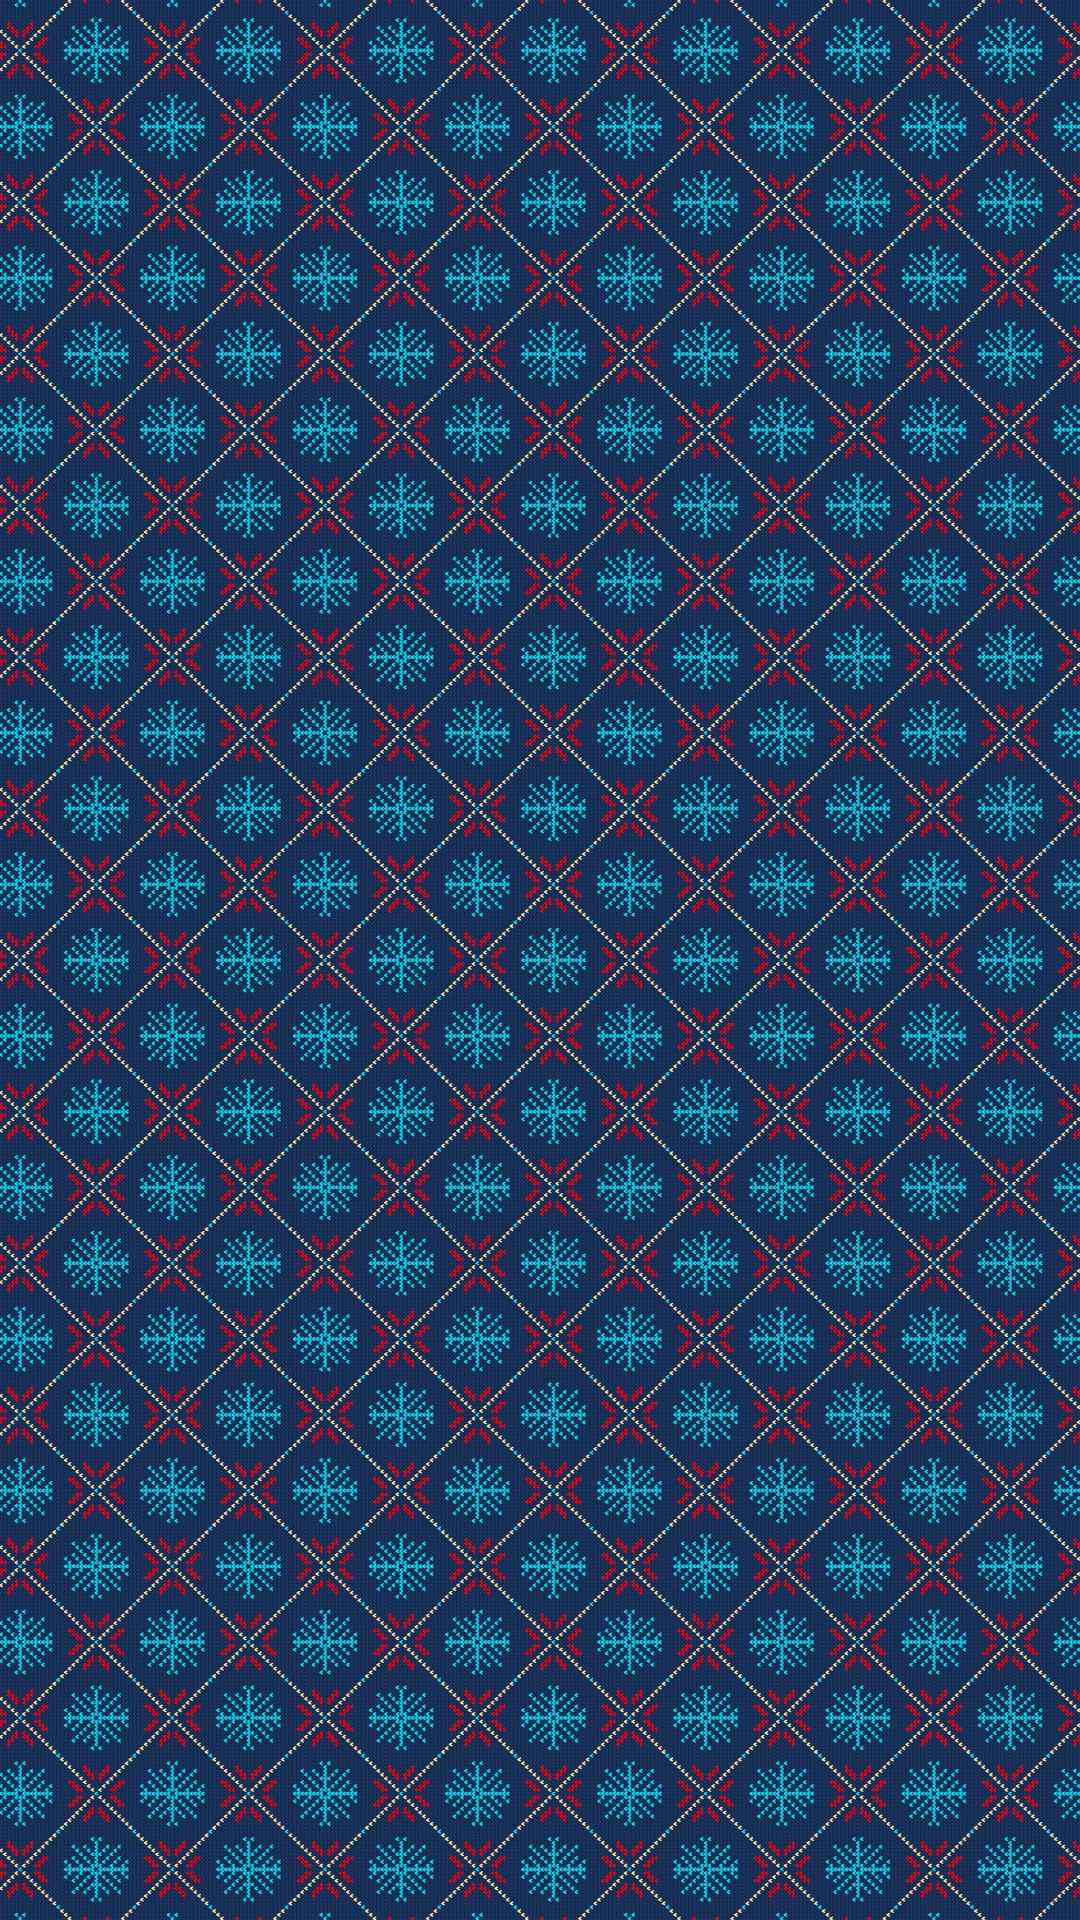 Texture pattern